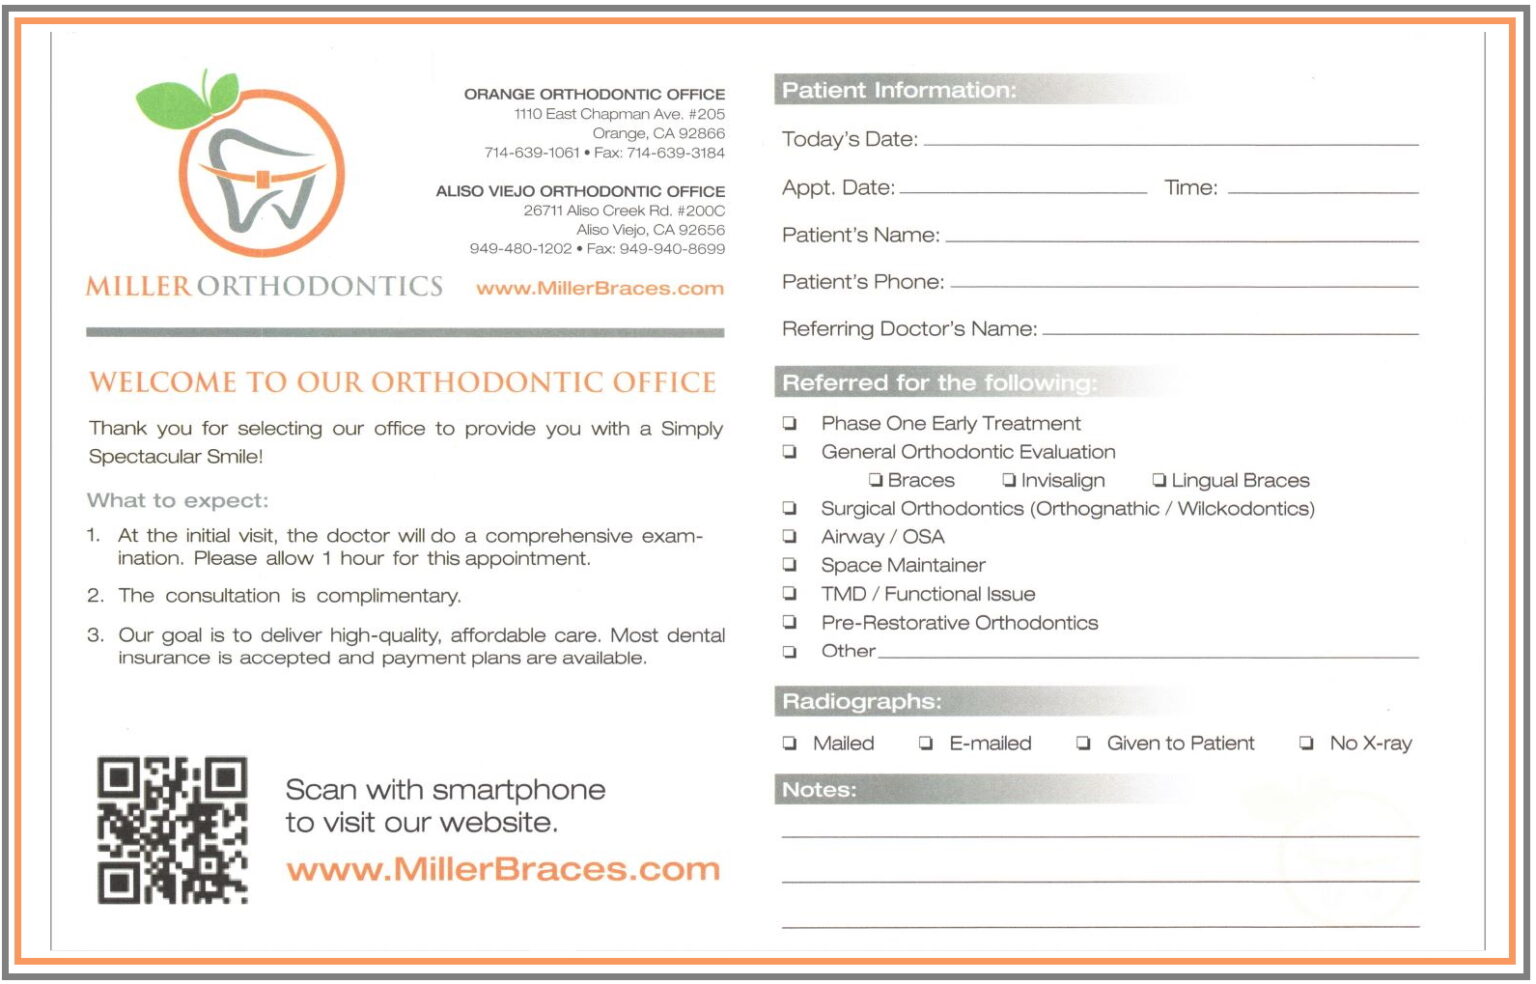 Referring Doctors - Miller Orthodontics